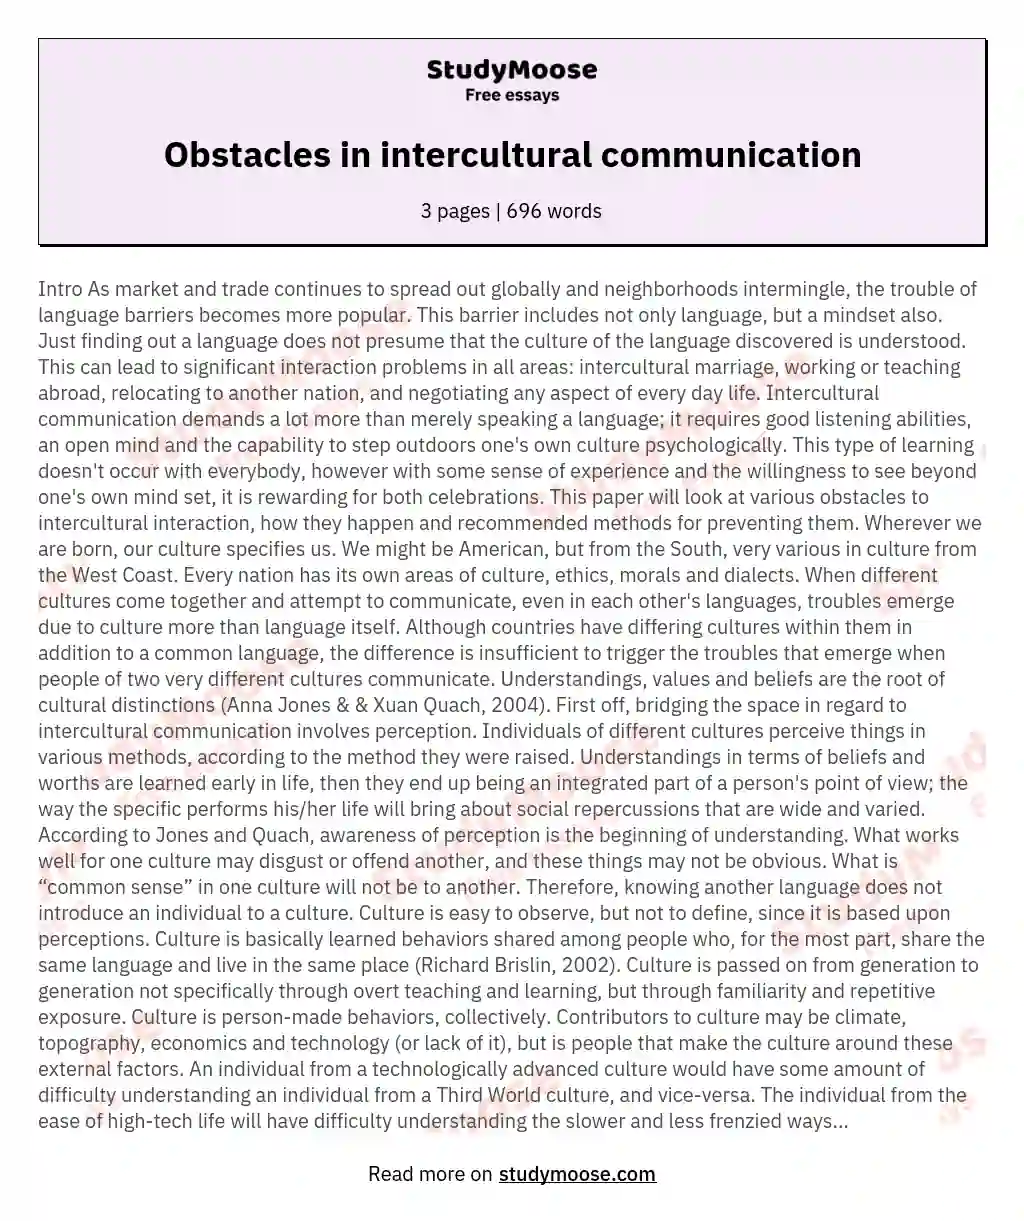 intercultural education essay